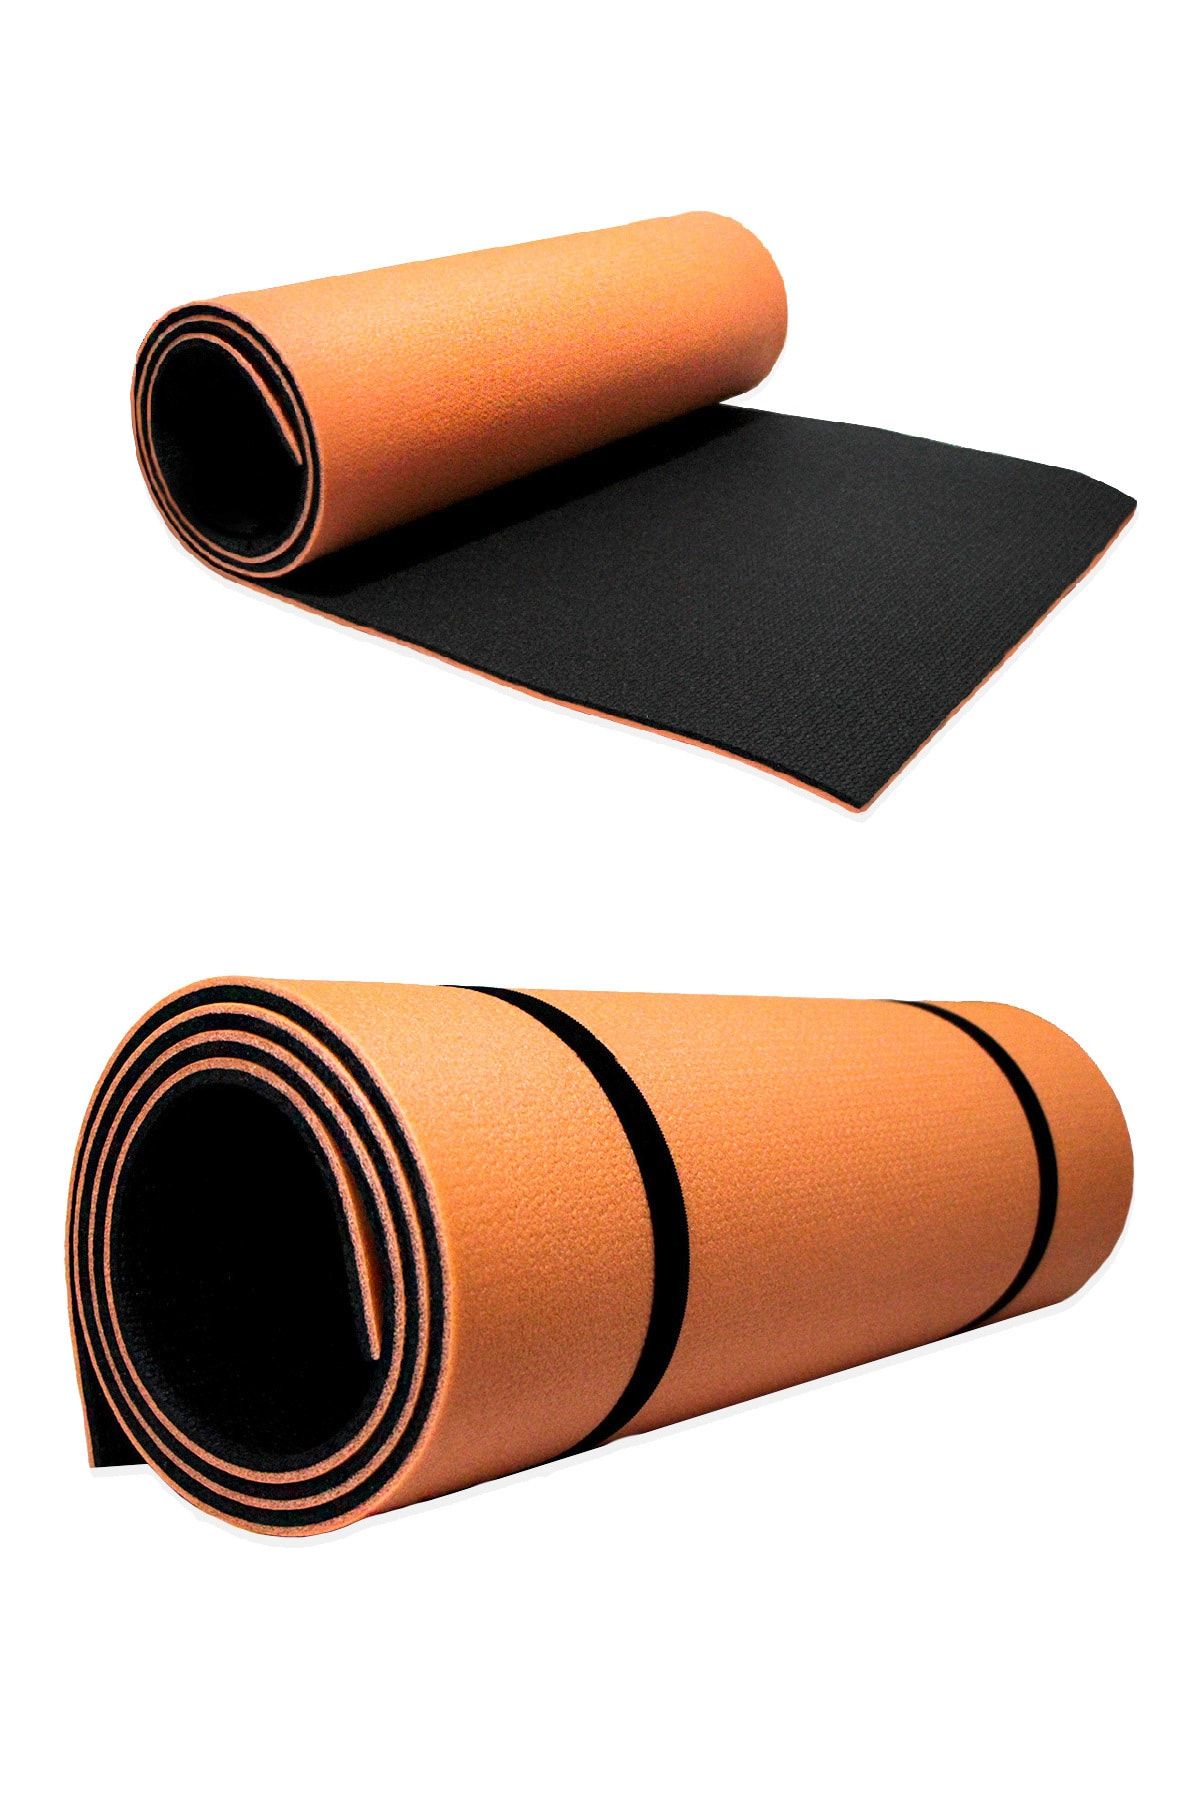 Yukon Turuncu Pilates Minderi & Yoga Mat Çift Taraflı 10 mm